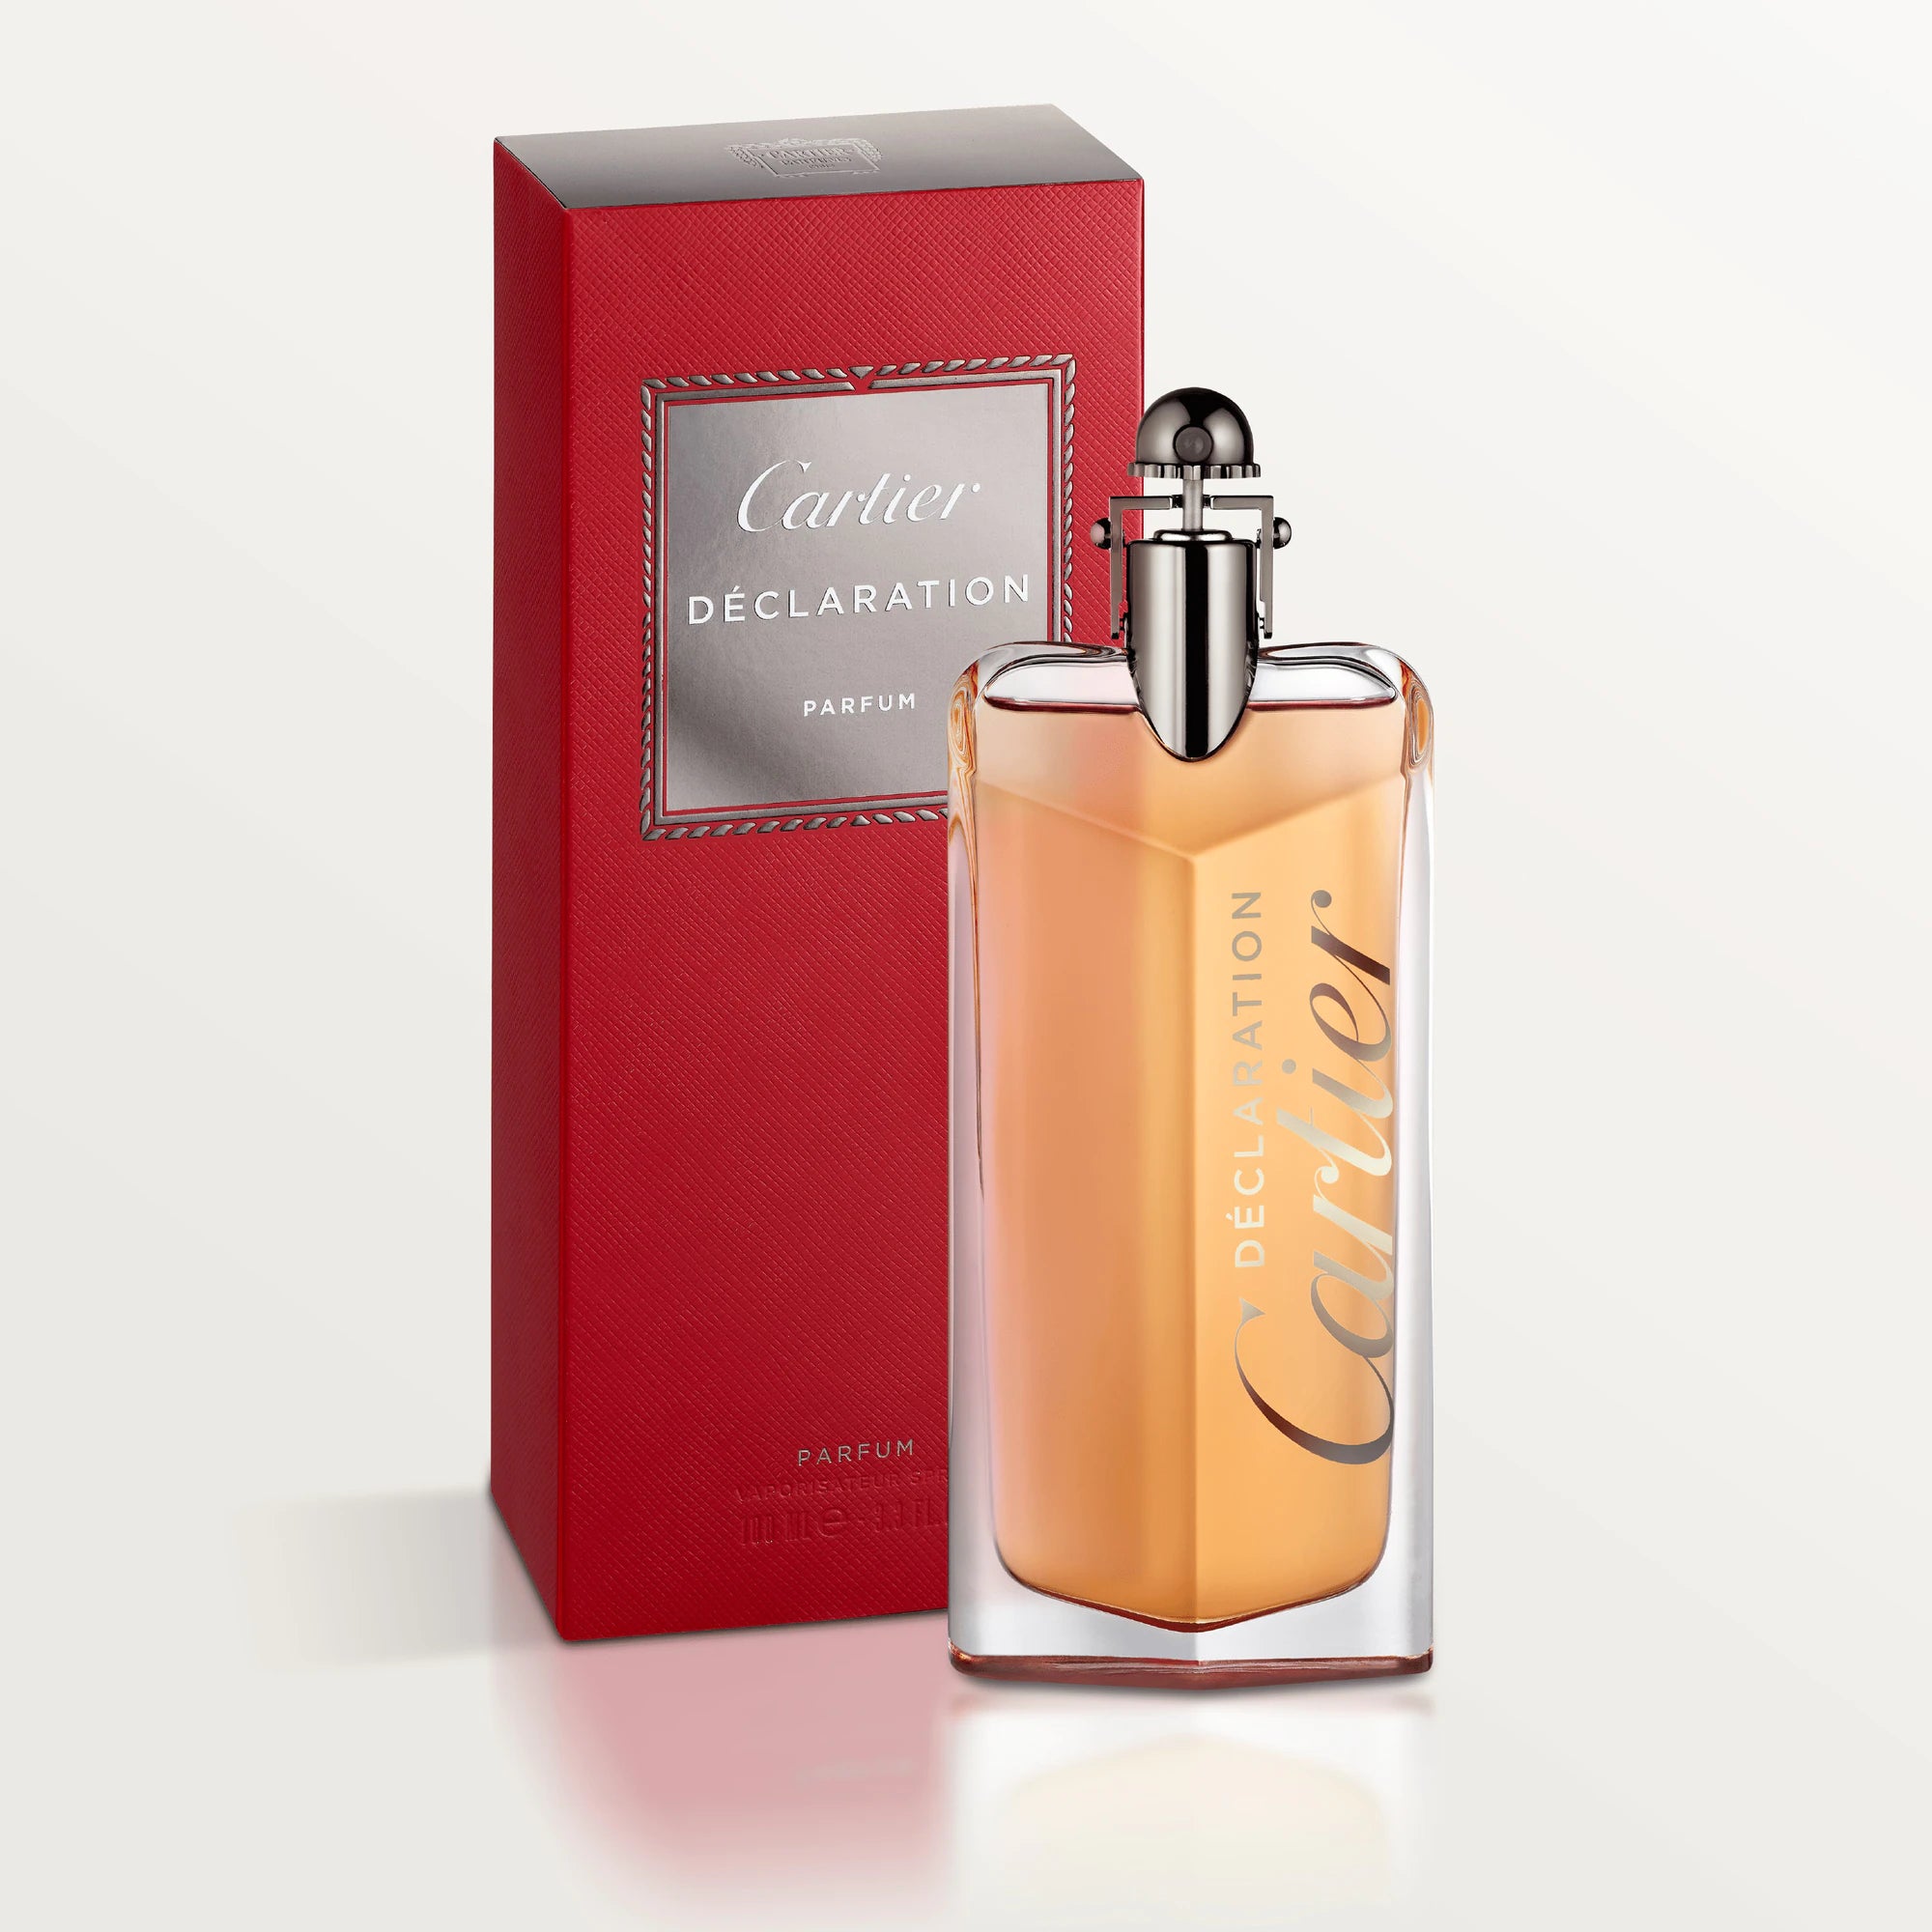 Cartier Déclaration Parfum 100ml - Parfum Gallerie